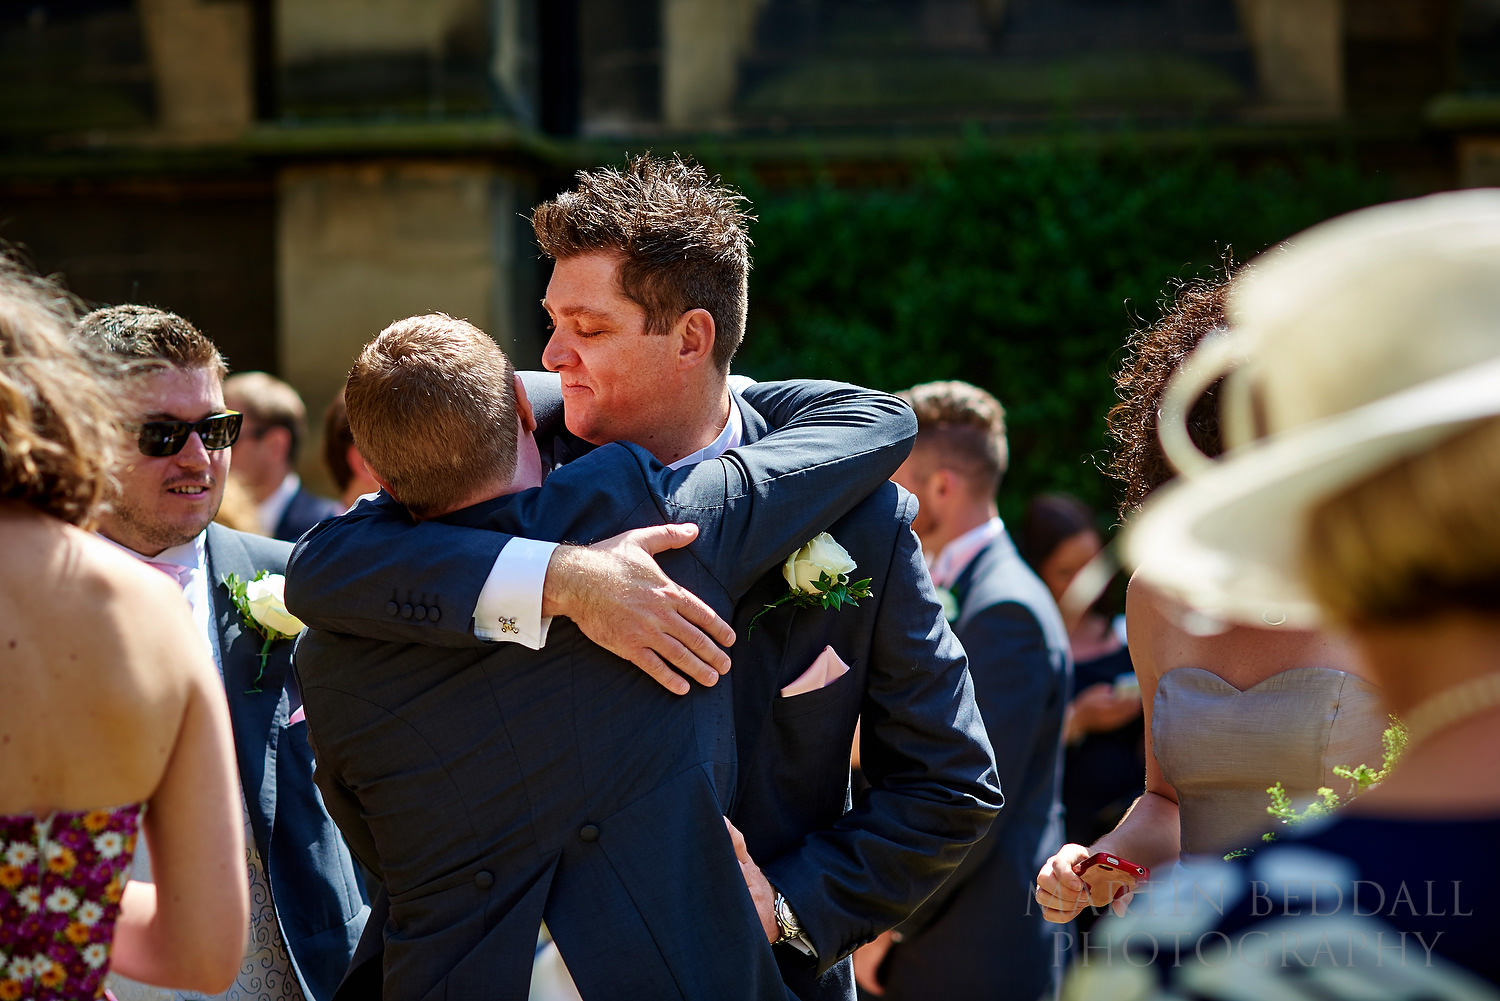 Friend hugs the groom